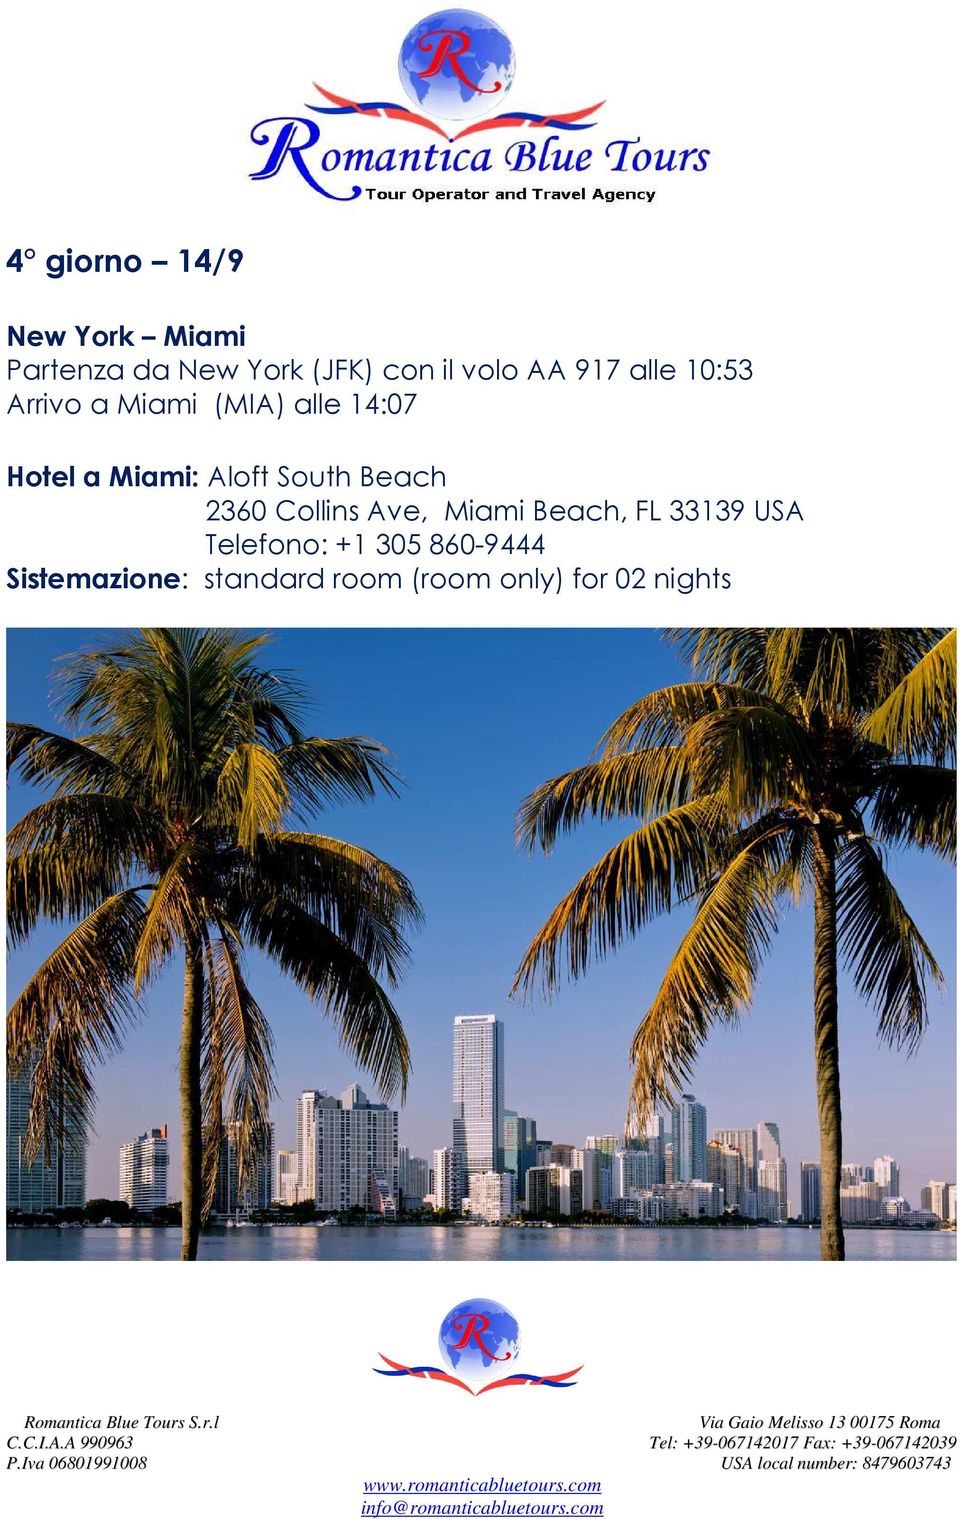 Aloft South Beach 2360 Collins Ave, Miami Beach, FL 33139 USA